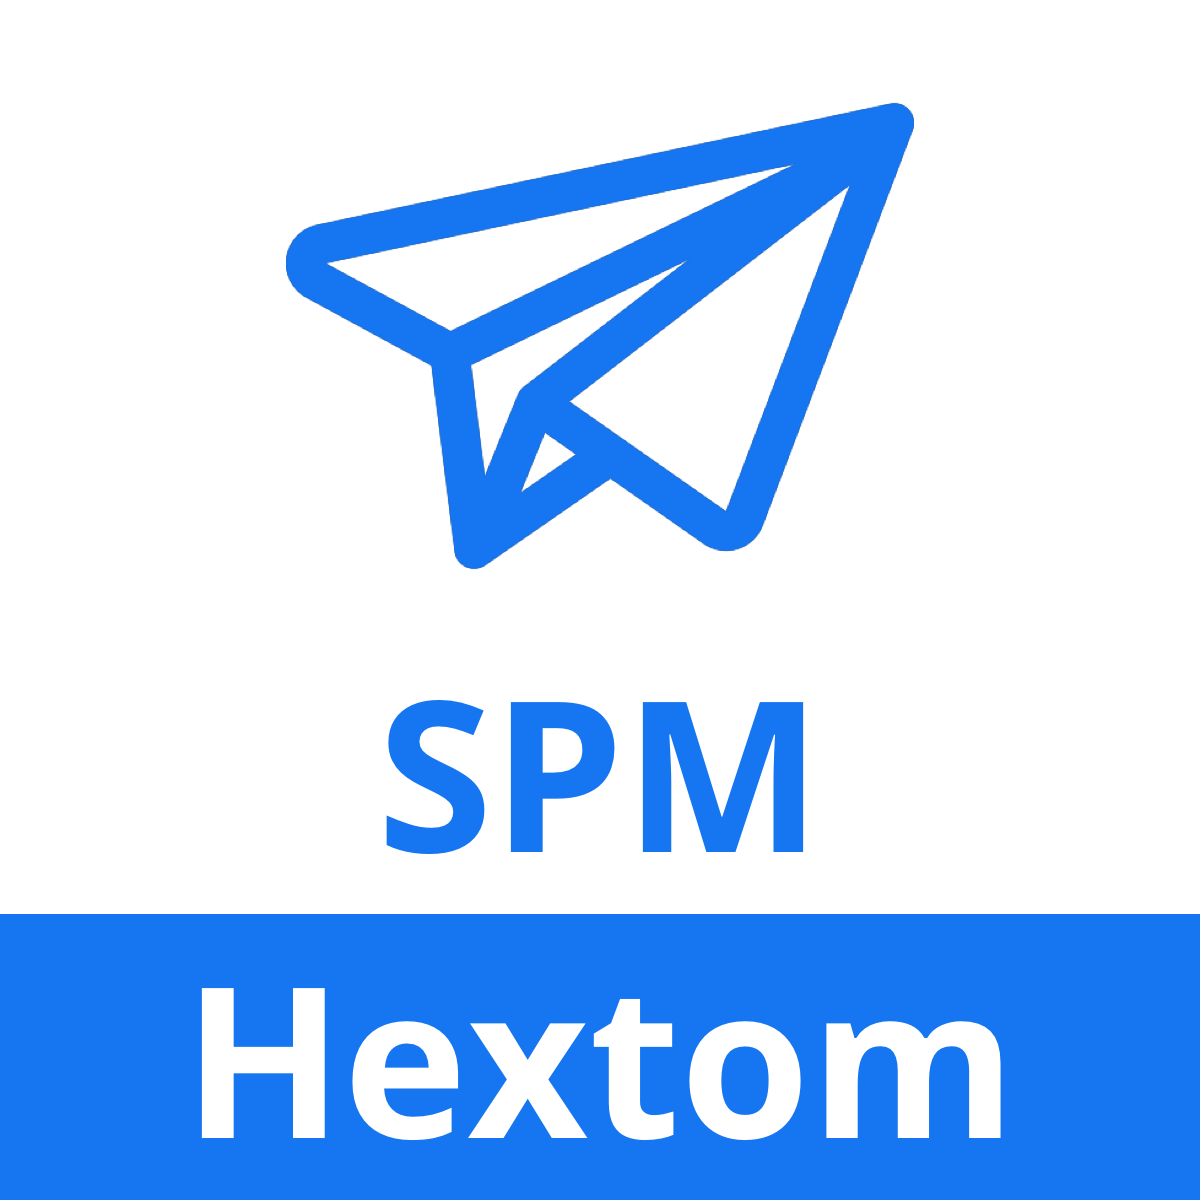 Hextom: WhatsApp, SMS & Push